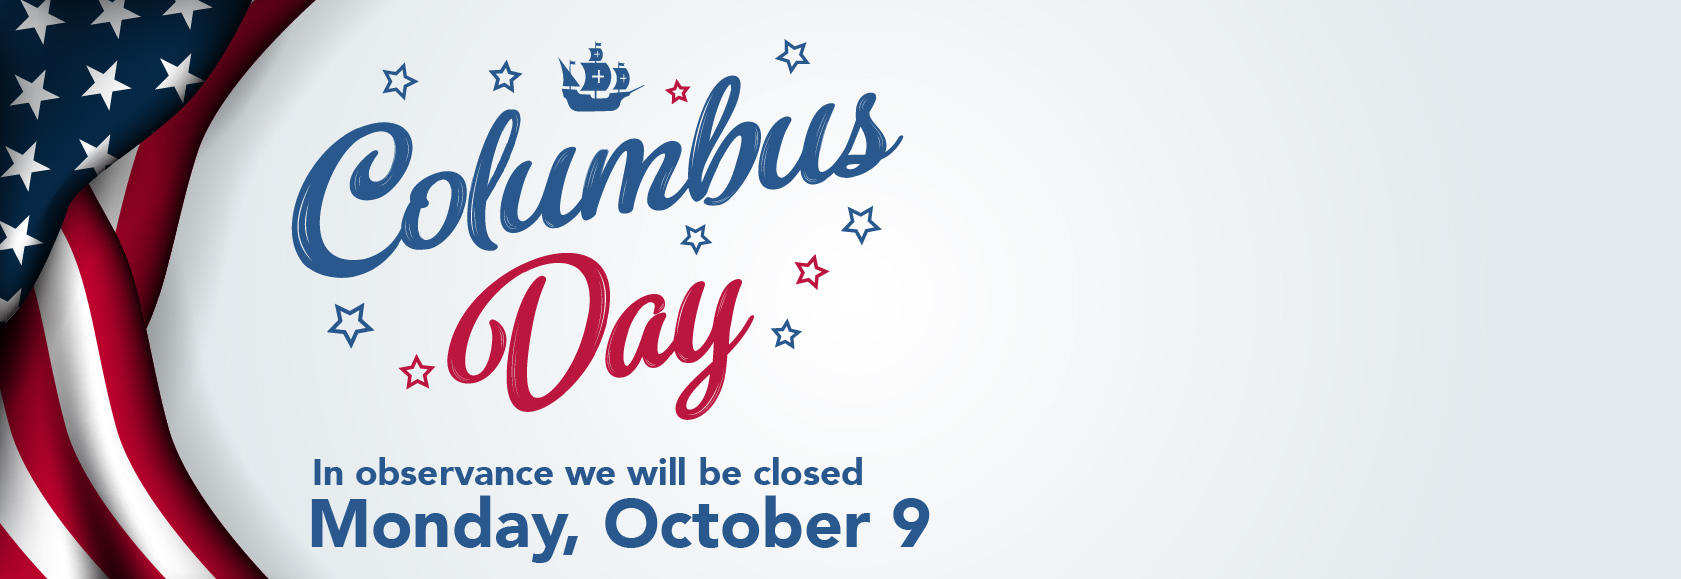 Columbus Day banner image